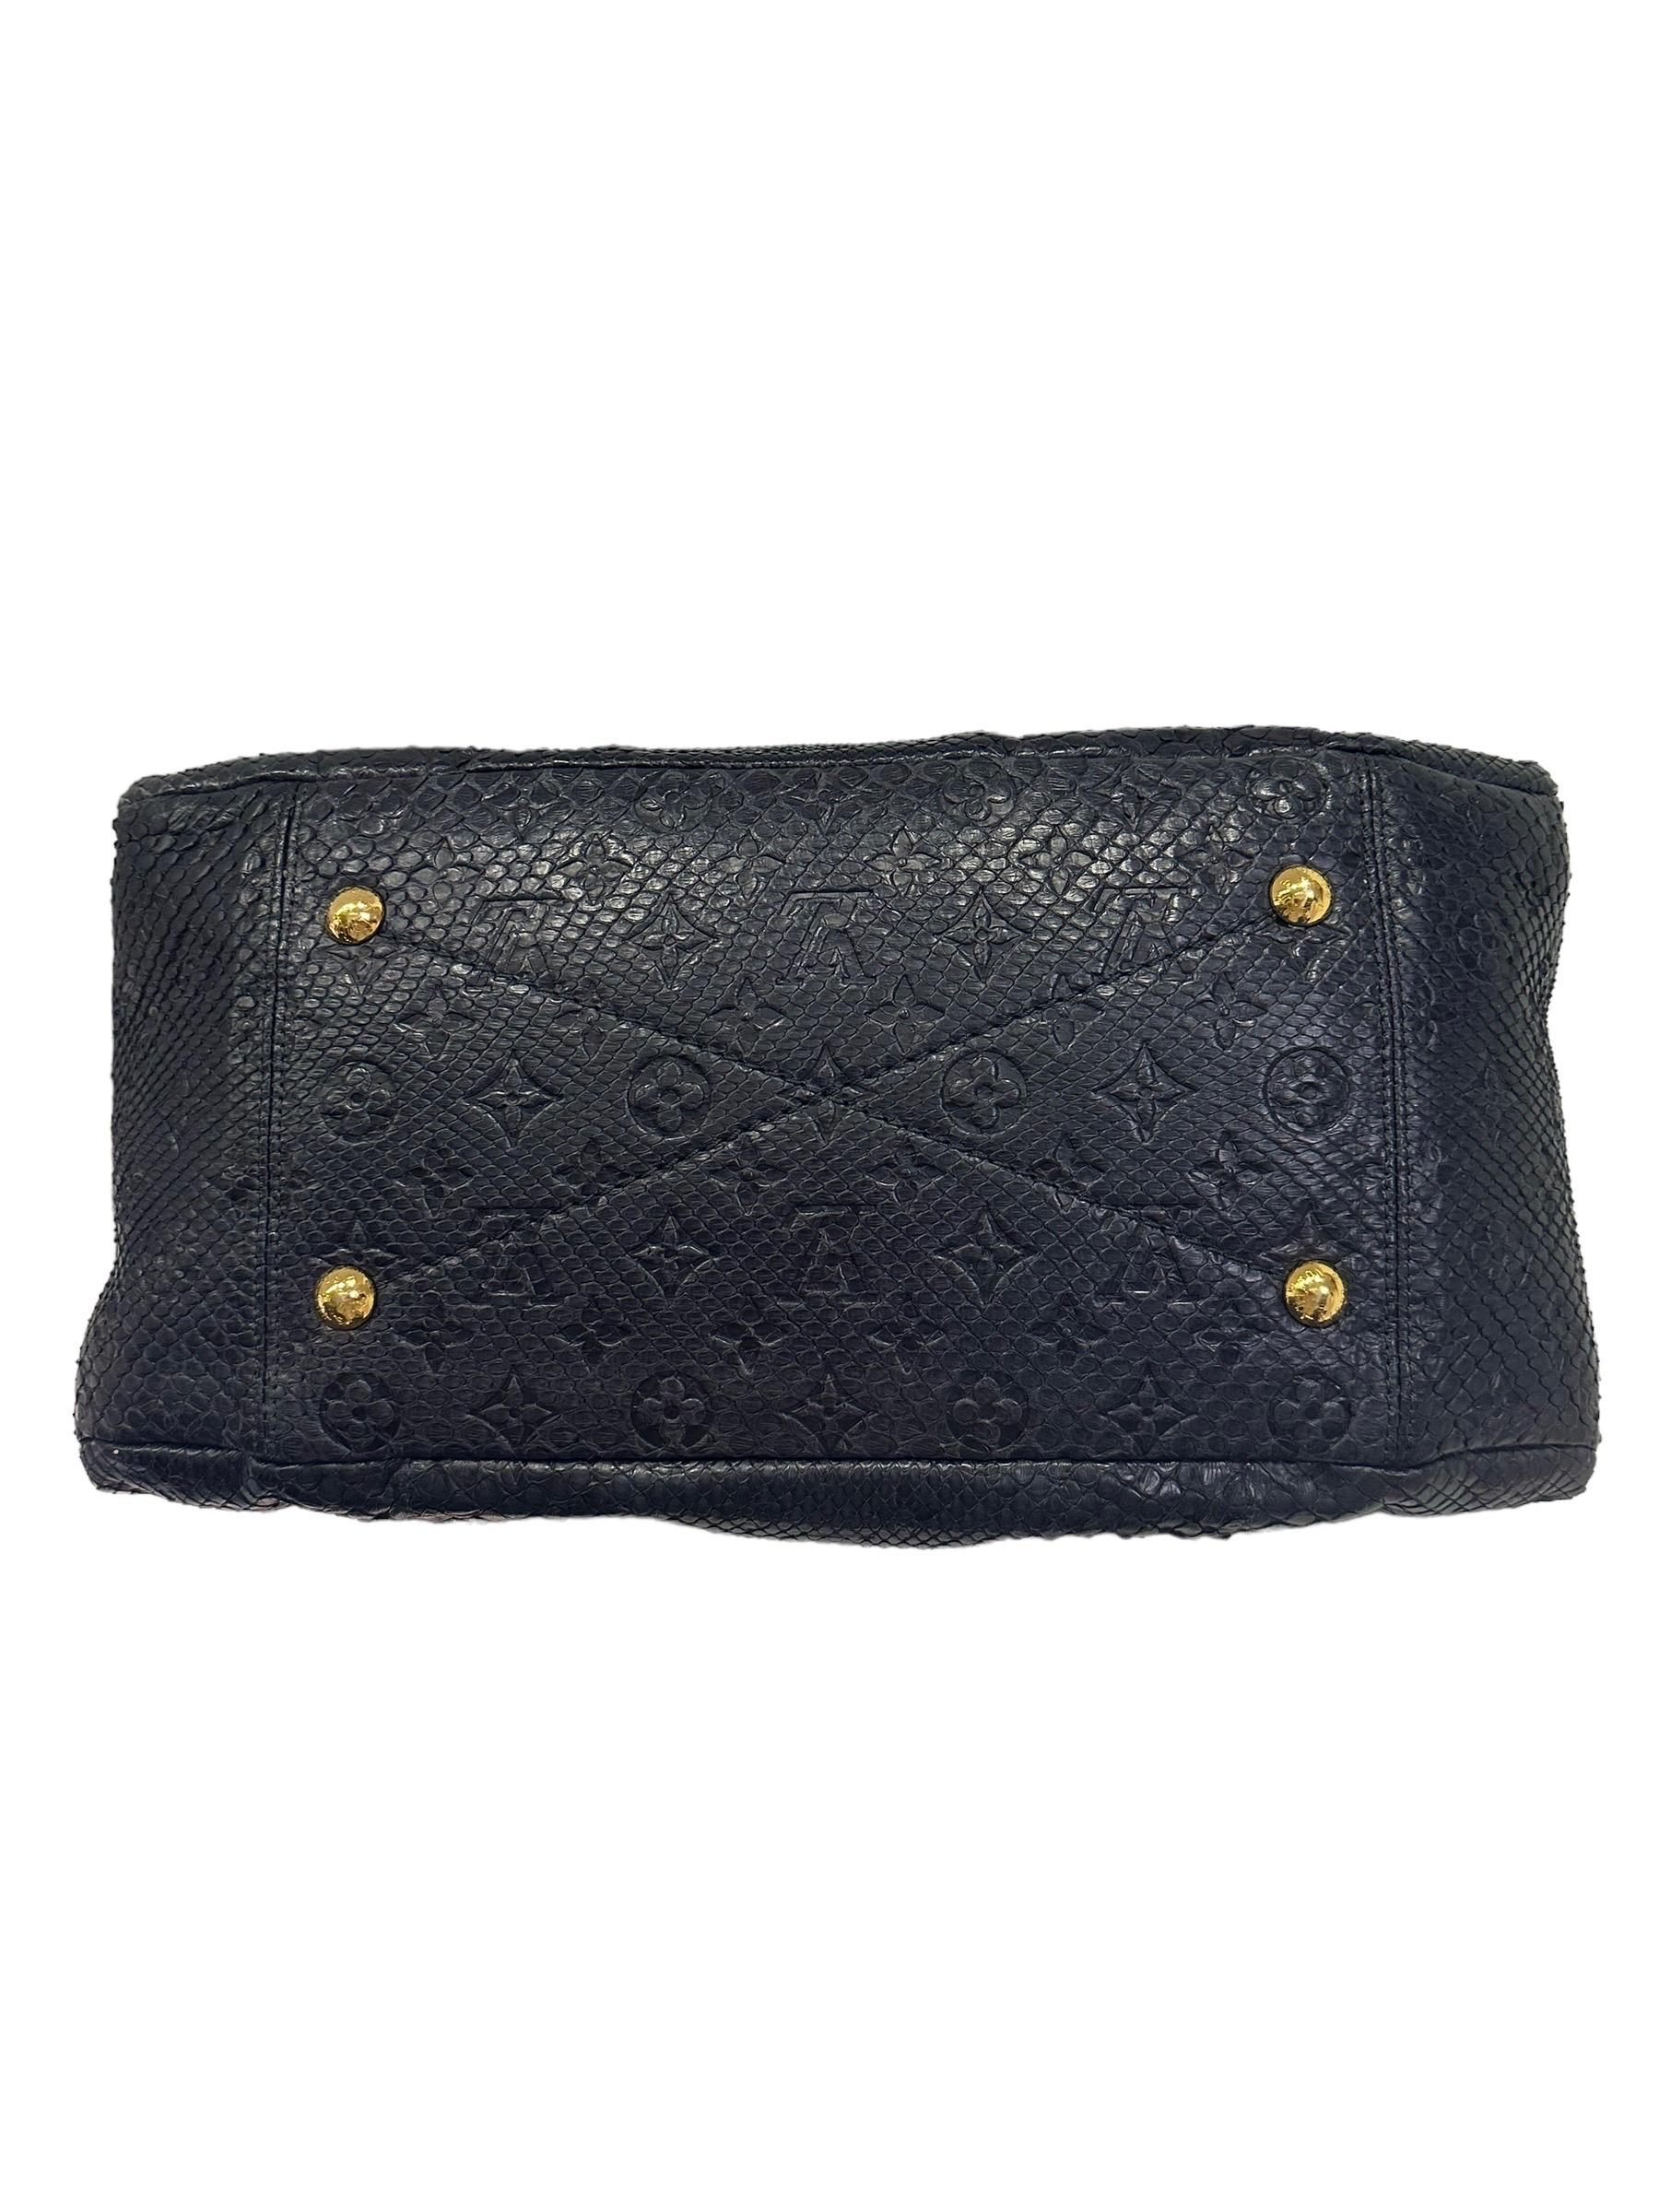 Louis Vuitton Artsy GM Blu Leather Top Handle Bag 3